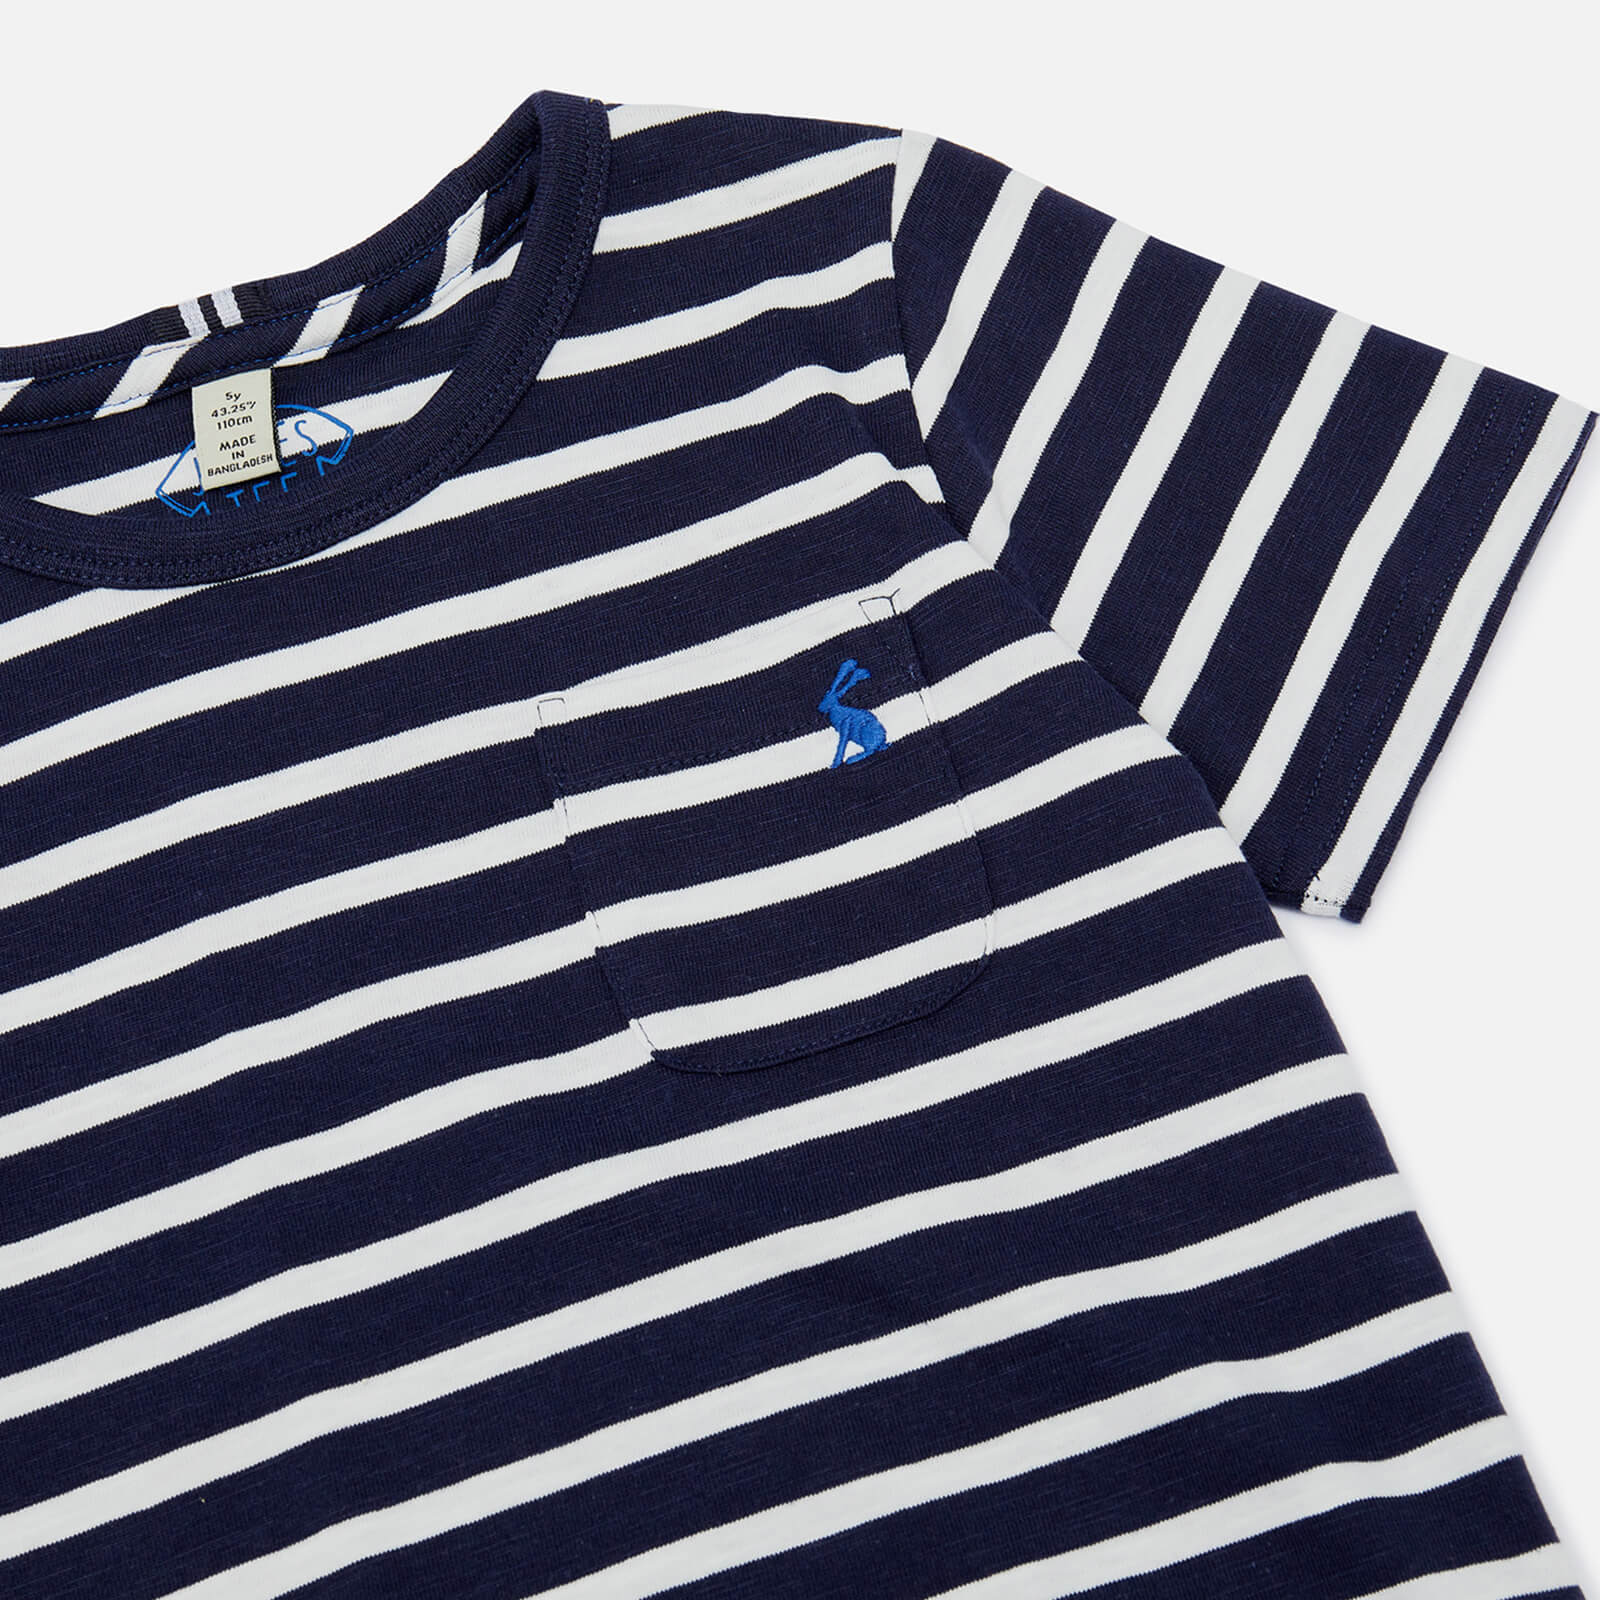 Joules Boys' Laundered Stripe T-Shirt - Navy White Stripe - 5 Years